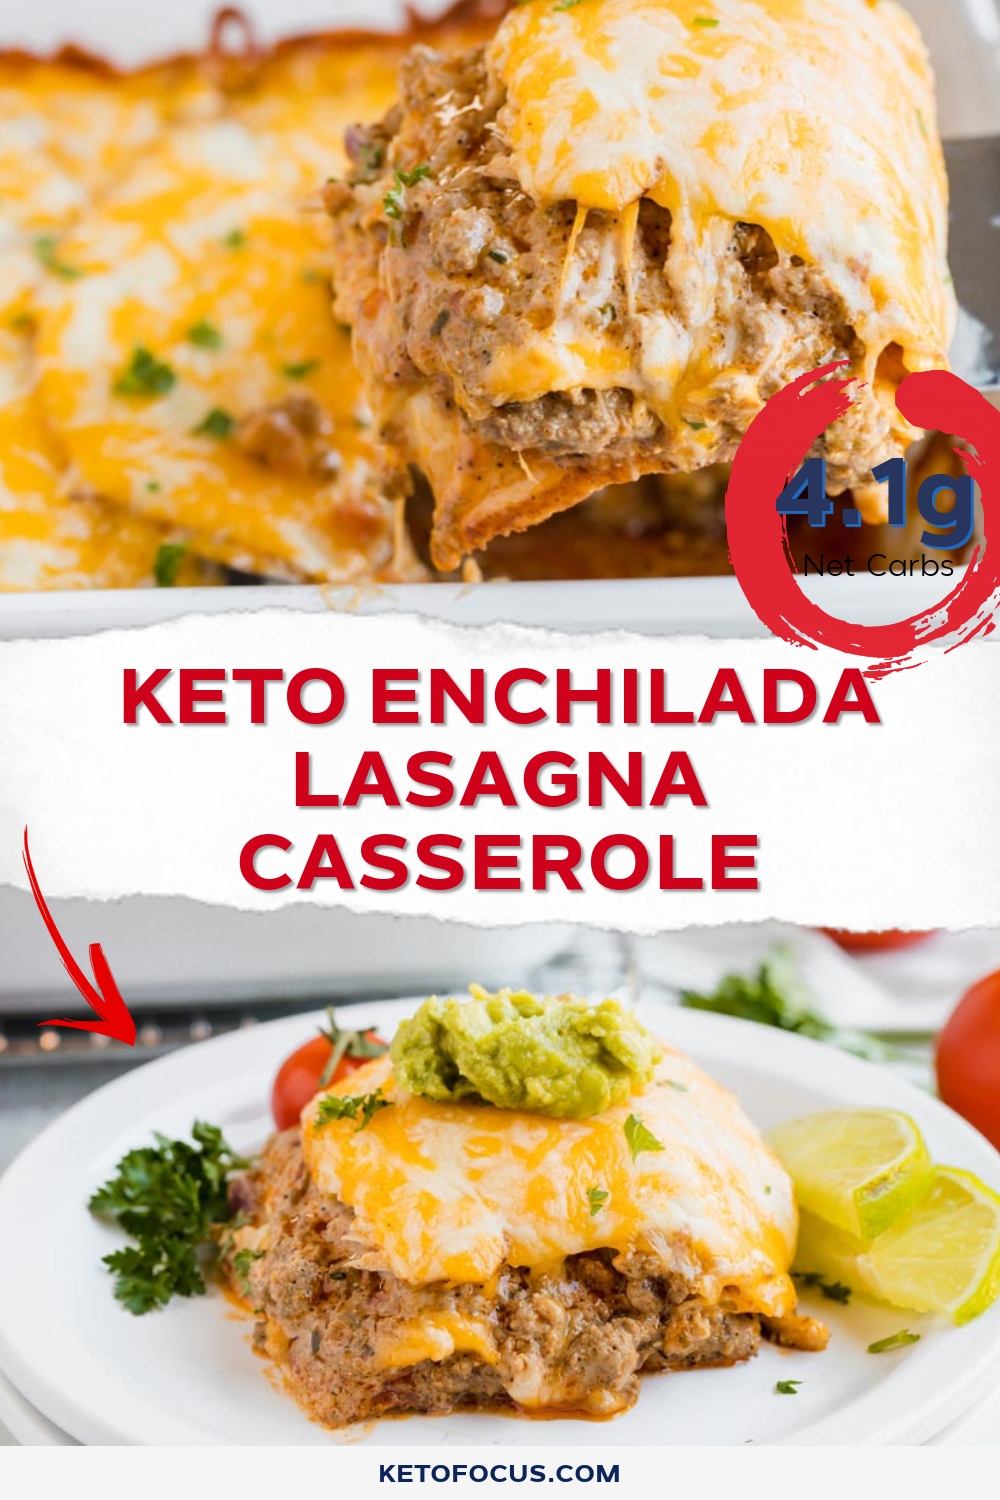 Keto Enchilada Lasagna Casserole